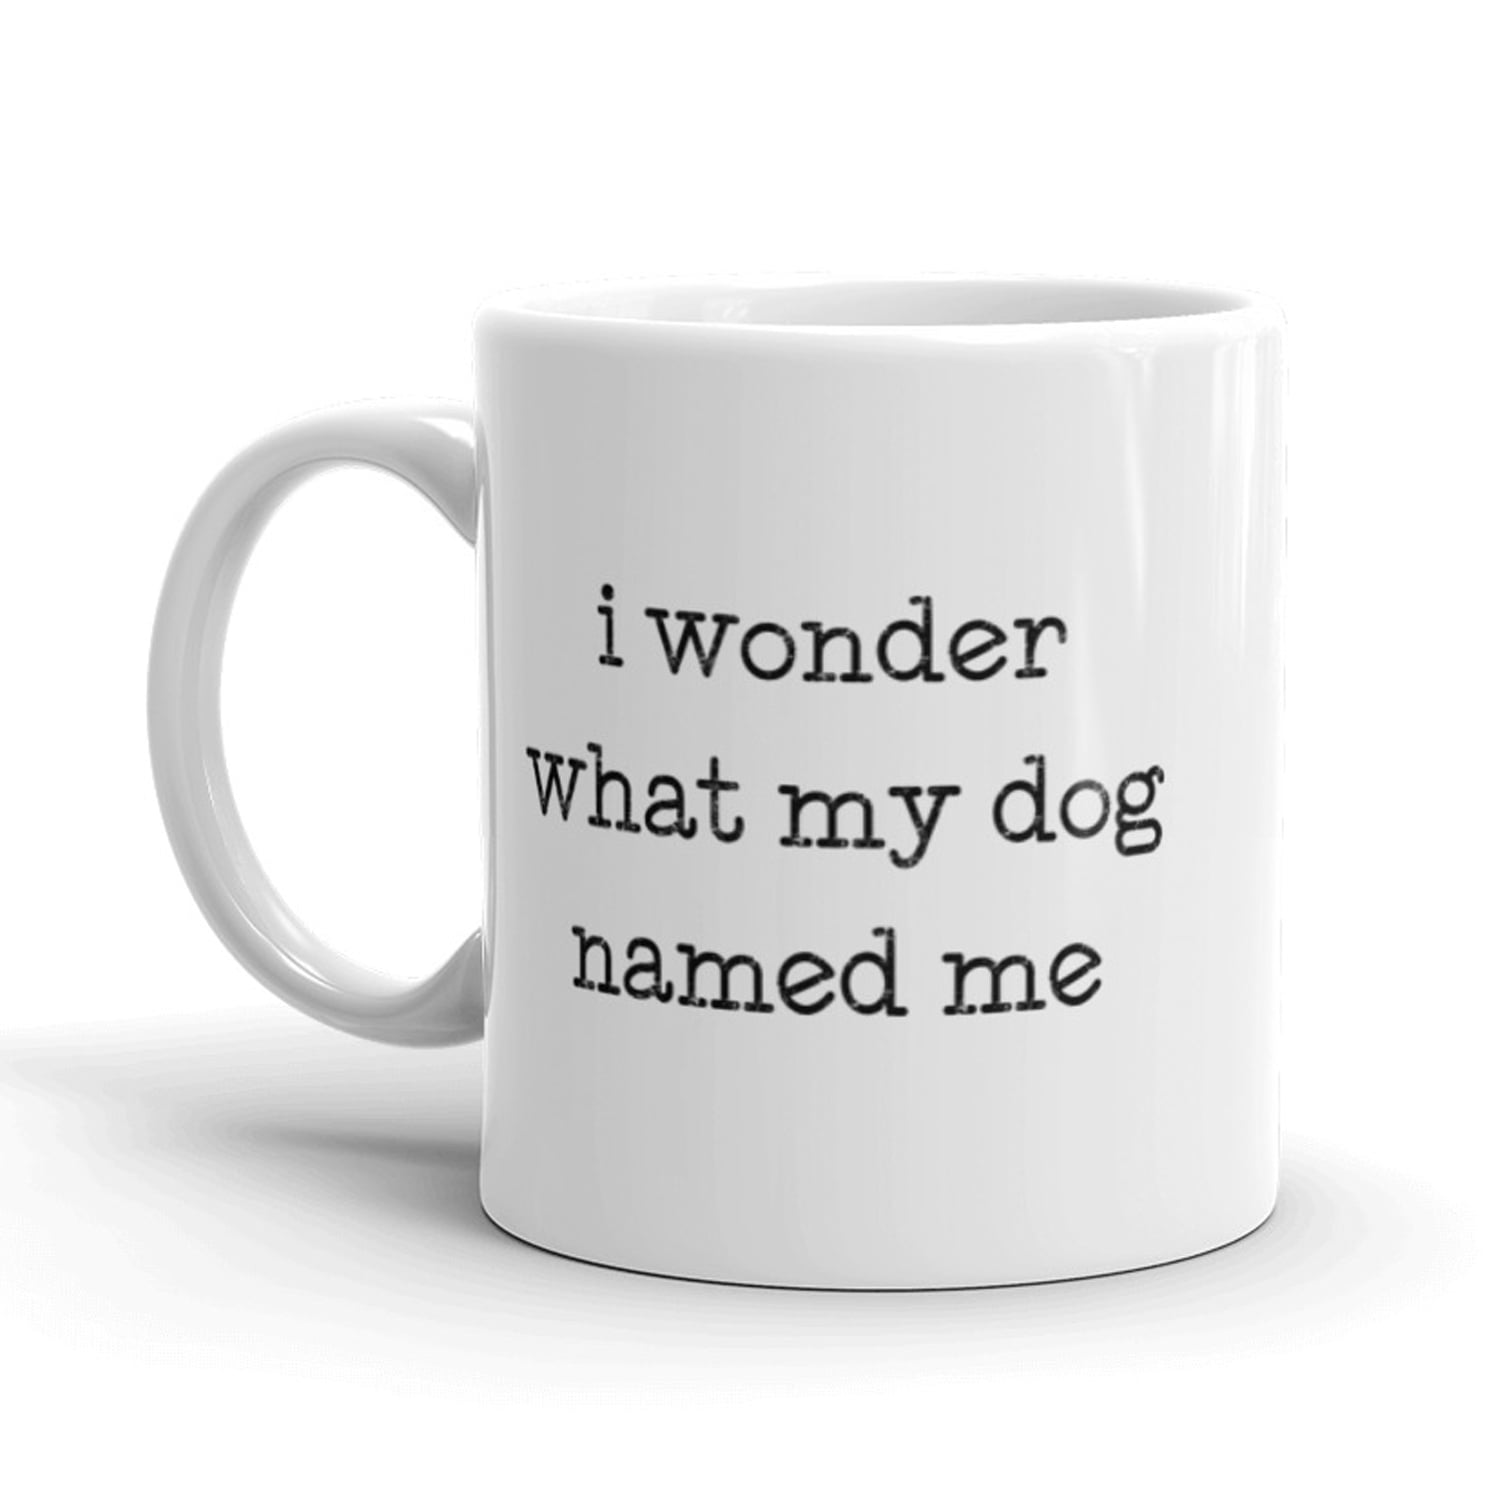 I Wonder What My Dog Named Me Coffee Mug Funny Pet Puppy Ceramic Cup-11oz - Walmart.com